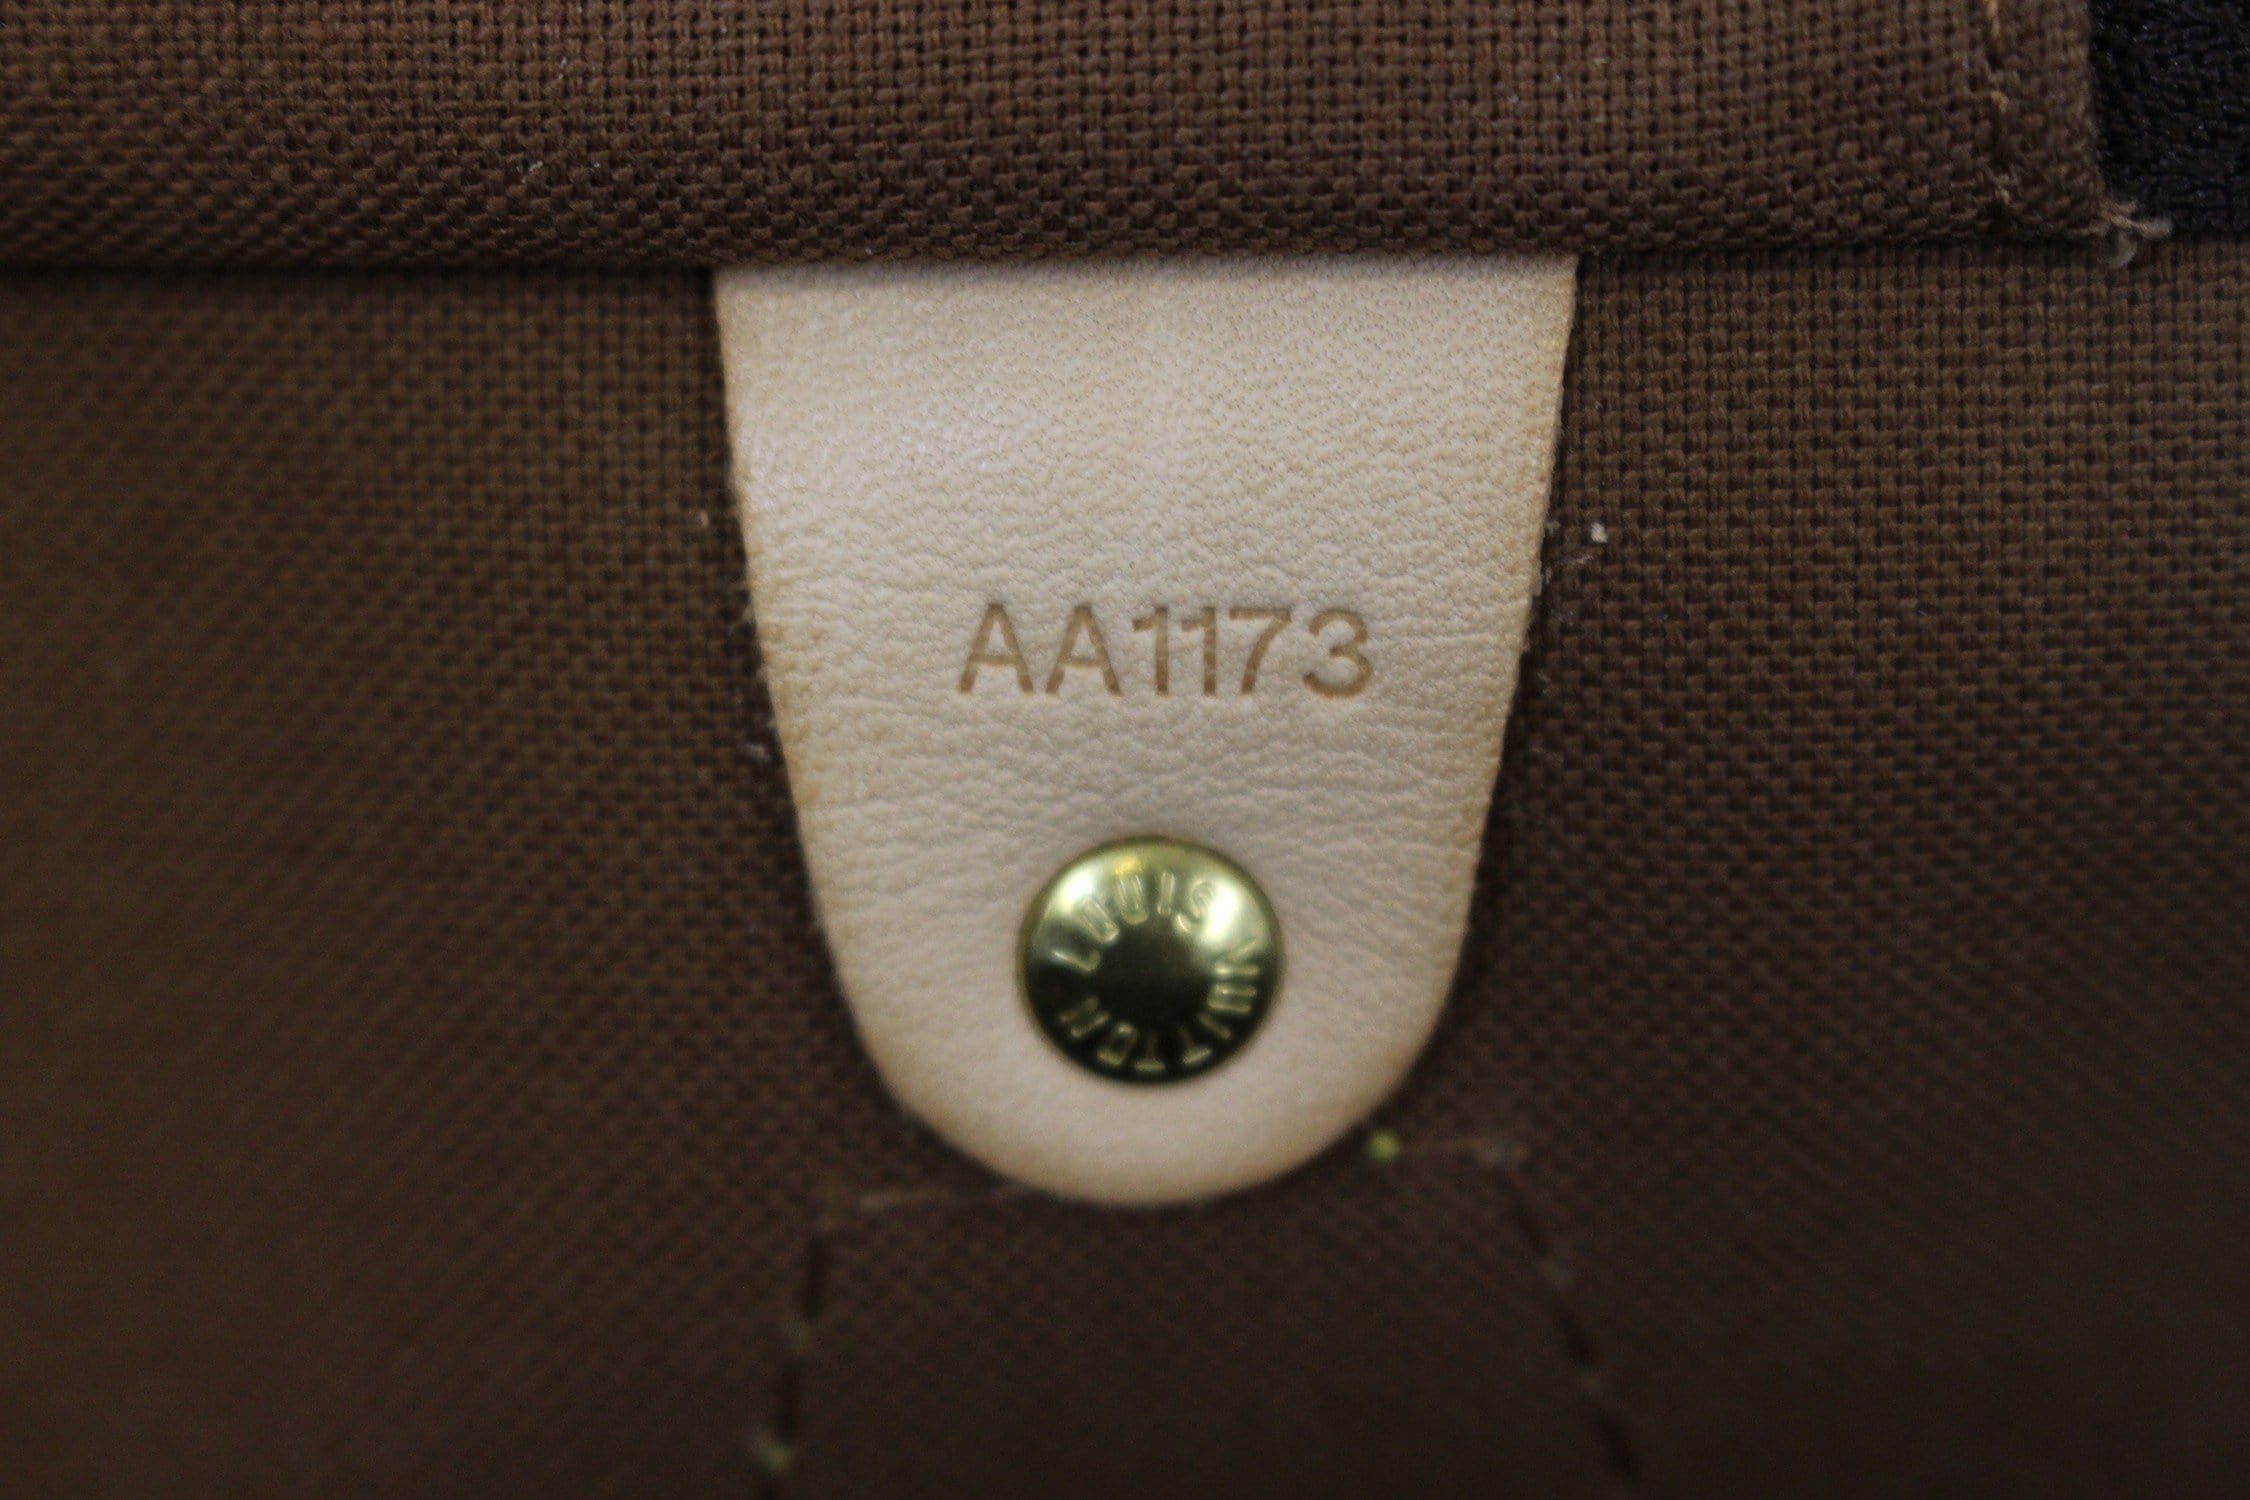 Pre-Owned Louis Vuitton Speedy Bandouliere 40 Shoulder Bag Boston Handbag  With Strap Keepall Monogram Brown M41110 AA1131 (Good) 